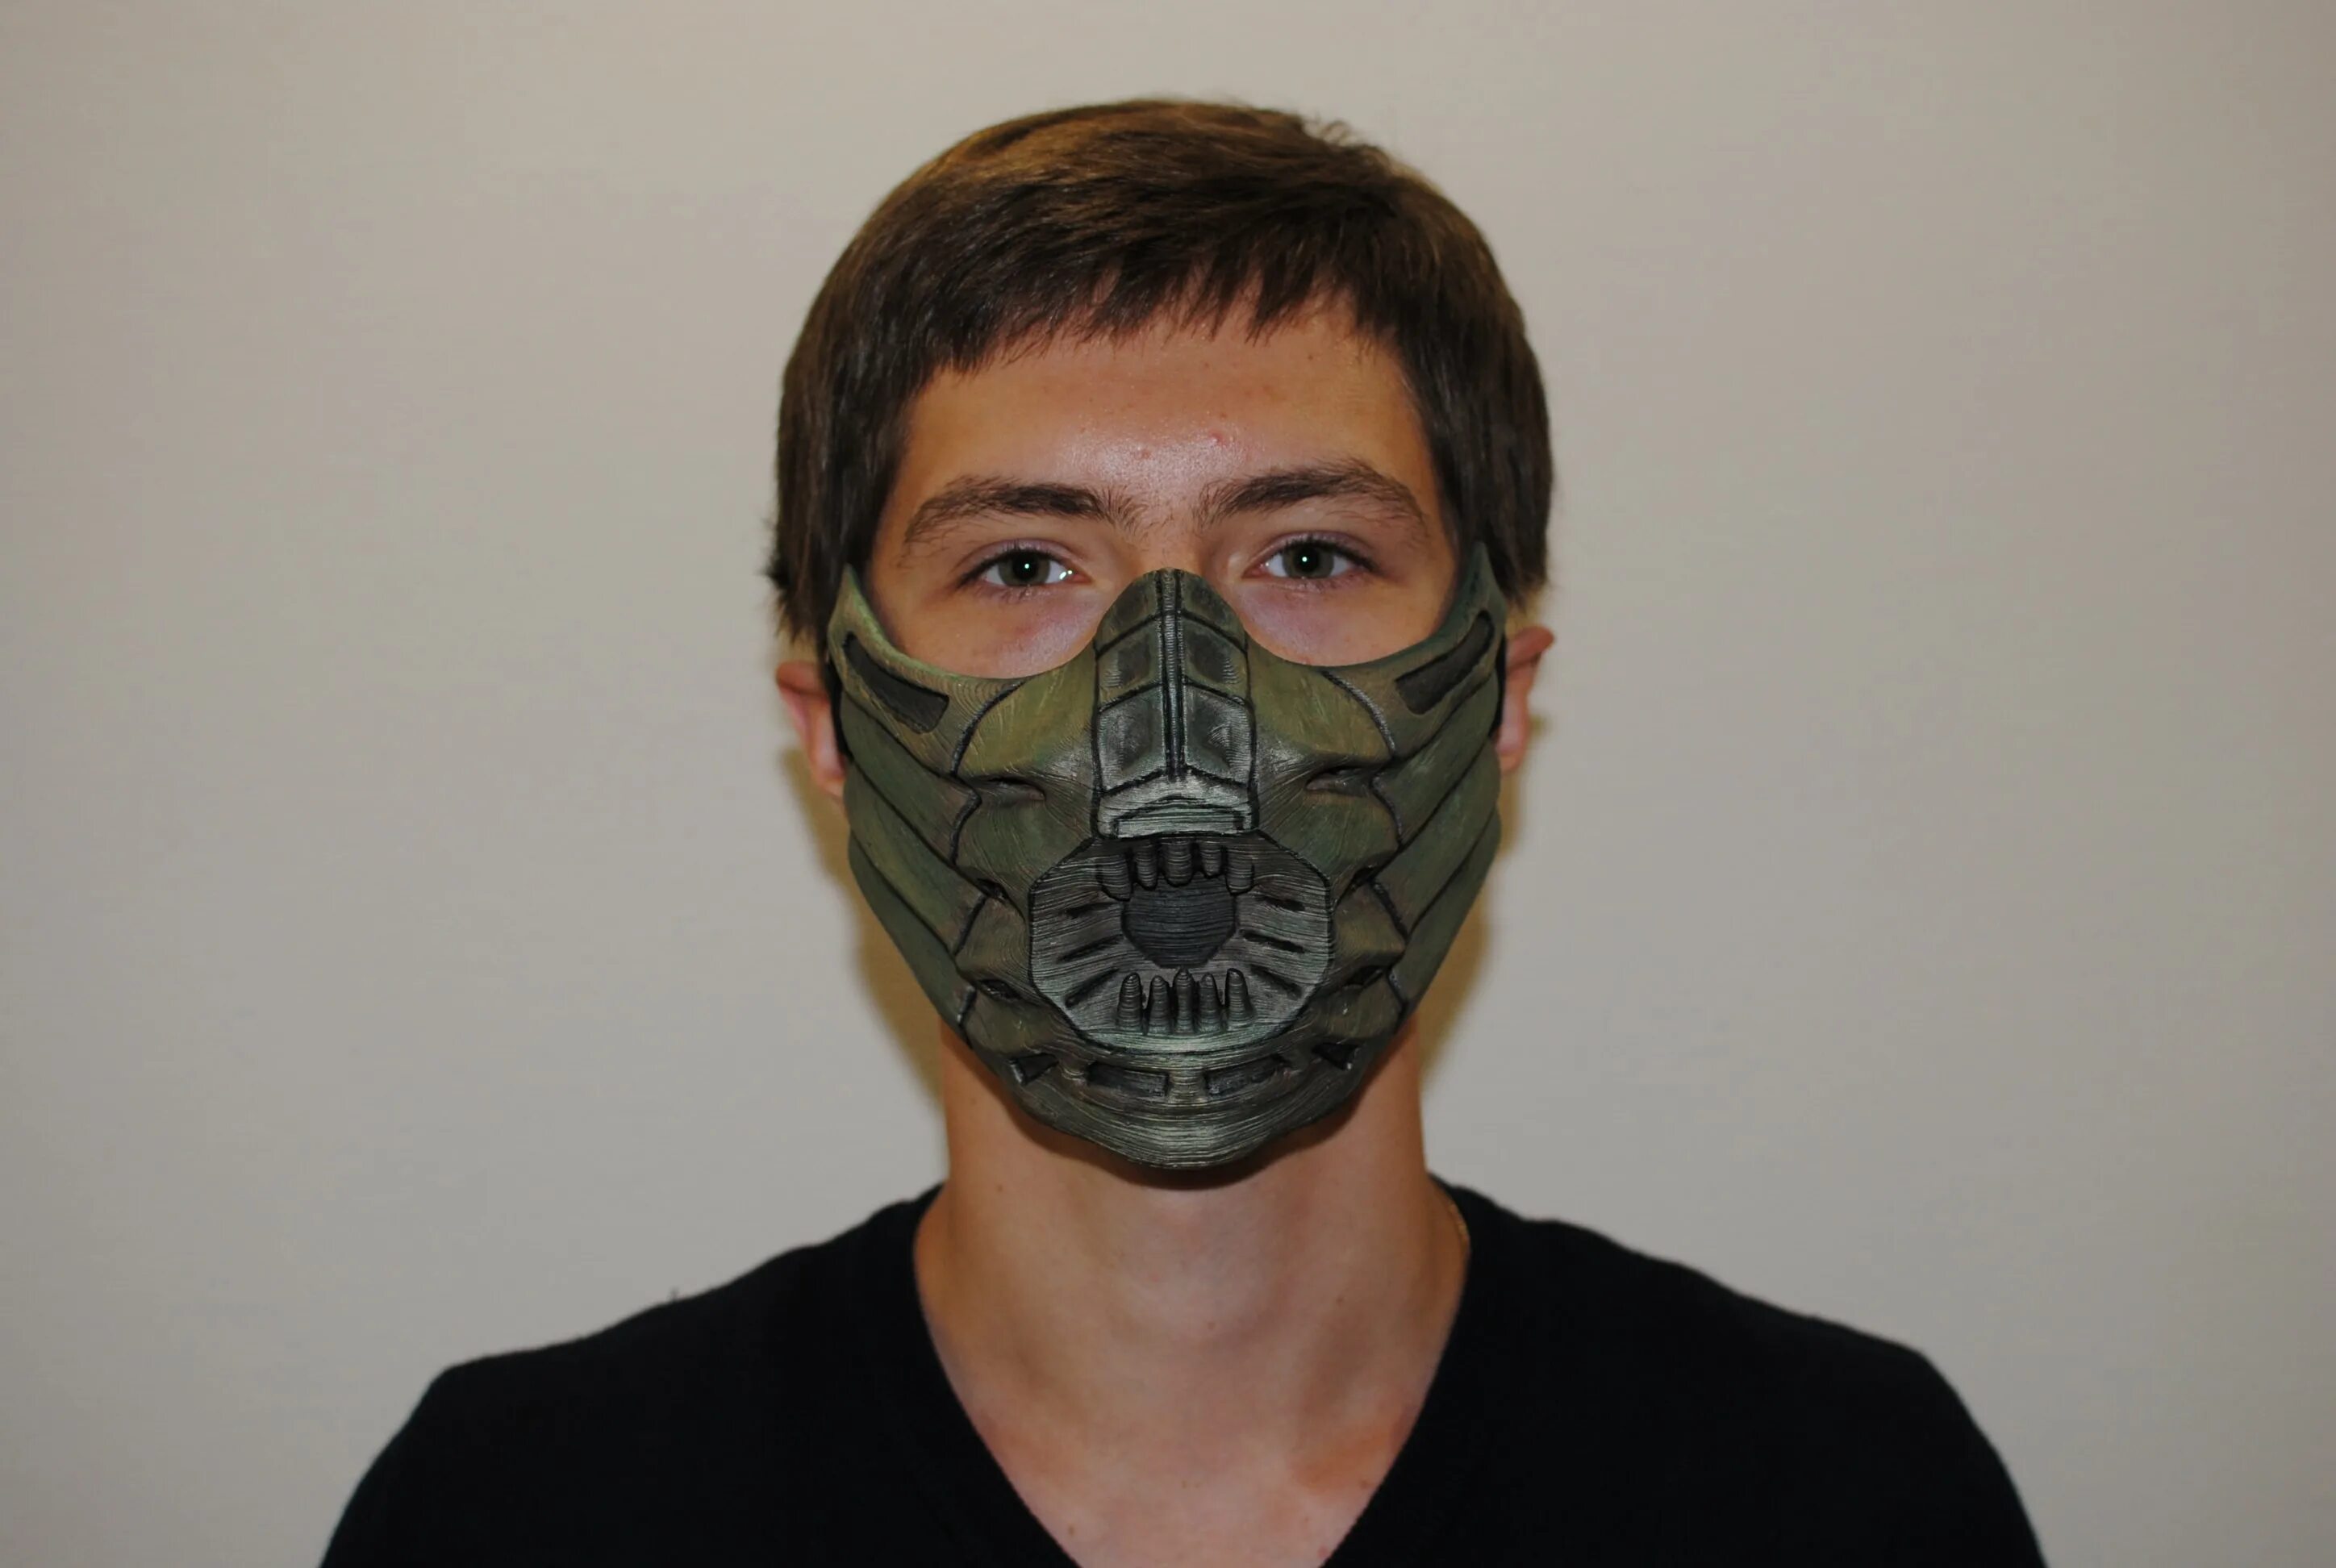 Купить без маски. Mortal Kombat Reptile Mask. Маска кабала из мортал комбат. Мортал комбат маска рептилии. Reptile MK Mask.